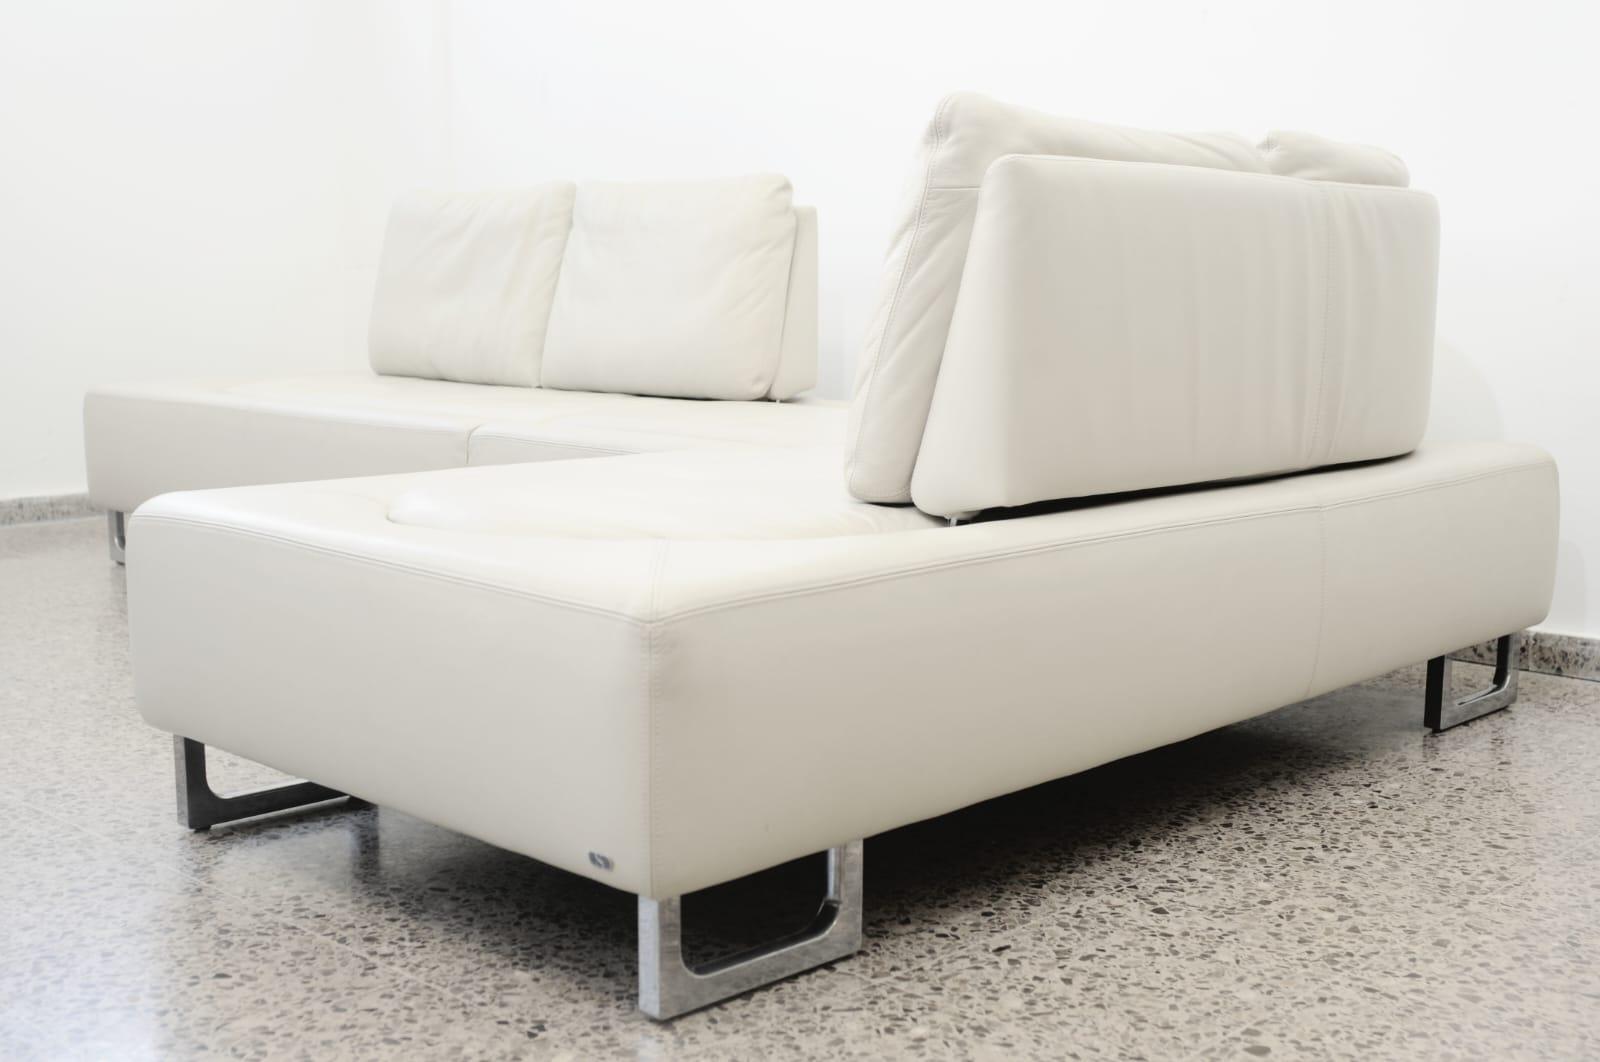 de Sede DS-165 Motion Leather Chaise Lounge Sofas For Sale 5